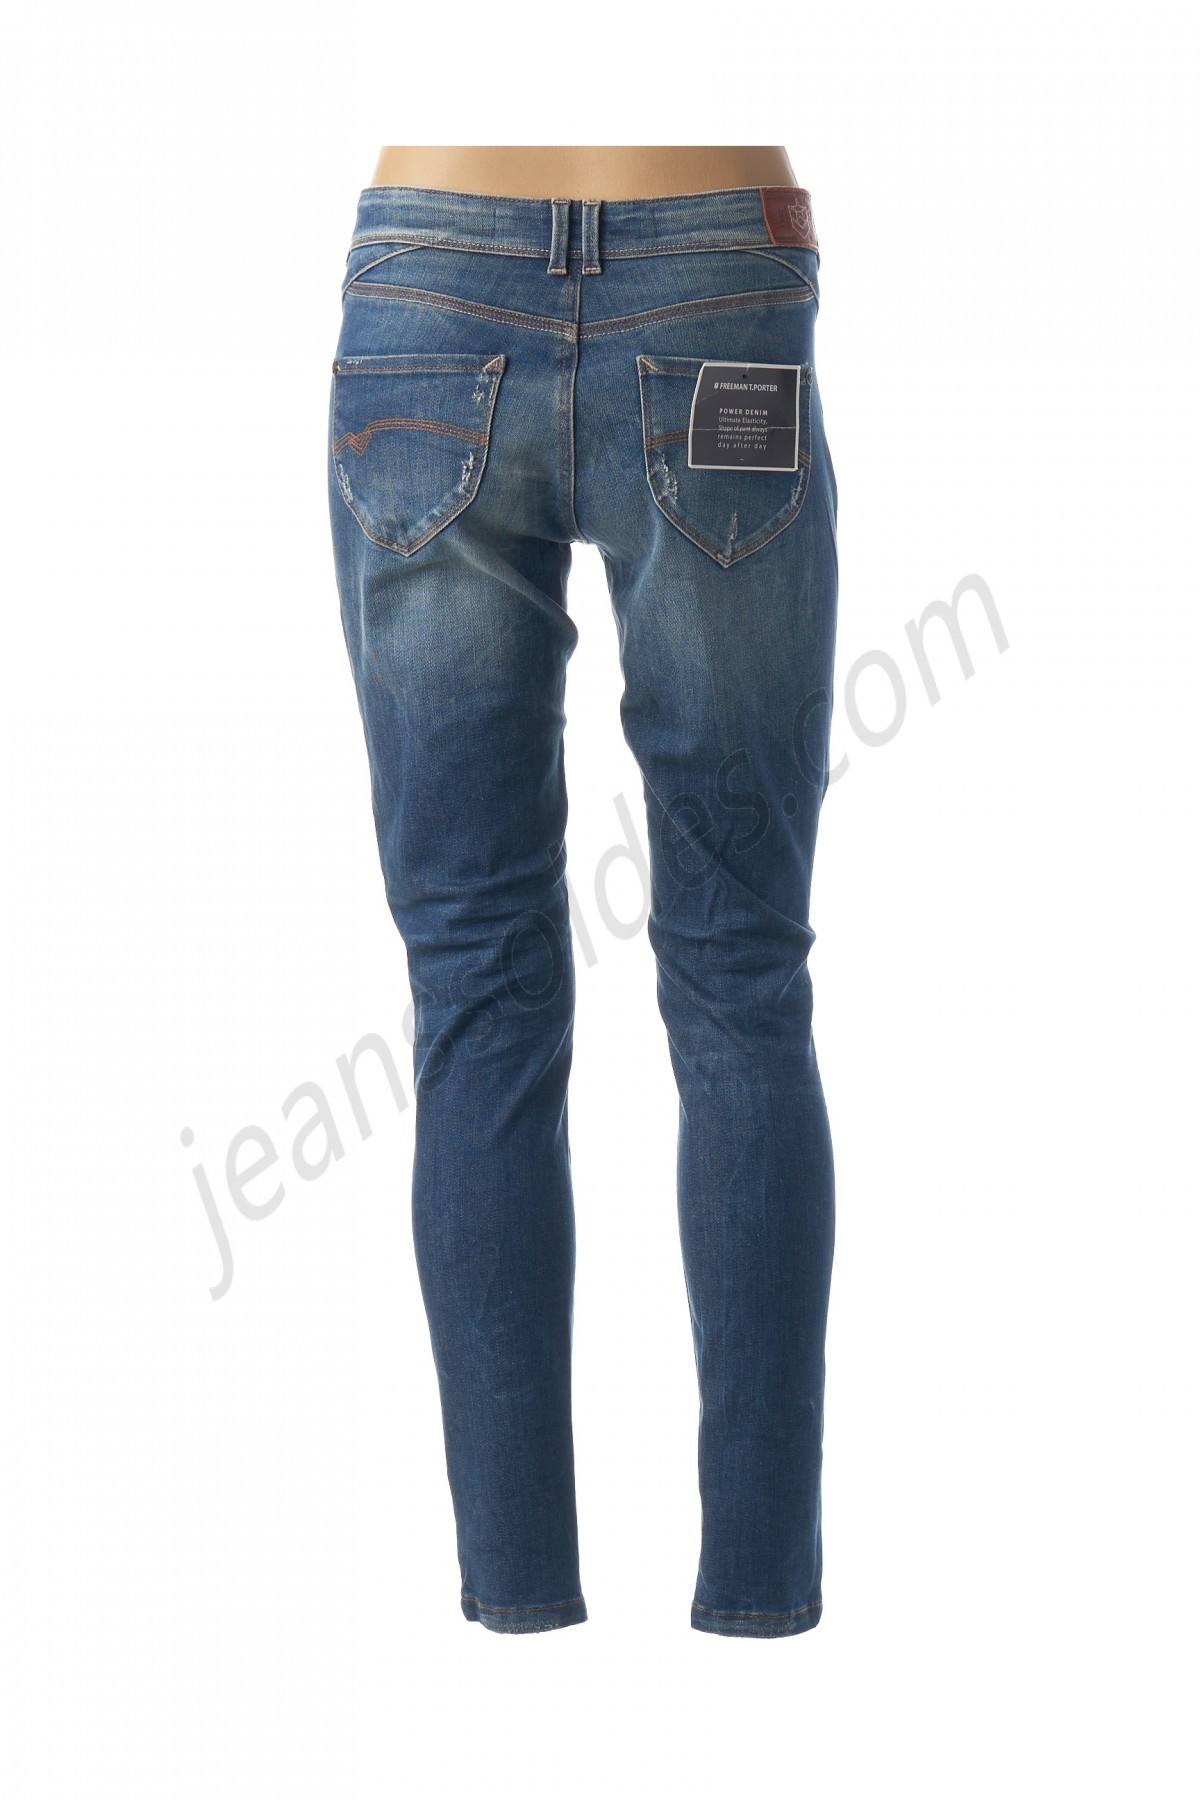 freeman t.porter-Jeans coupe slim prix d’amis - -1